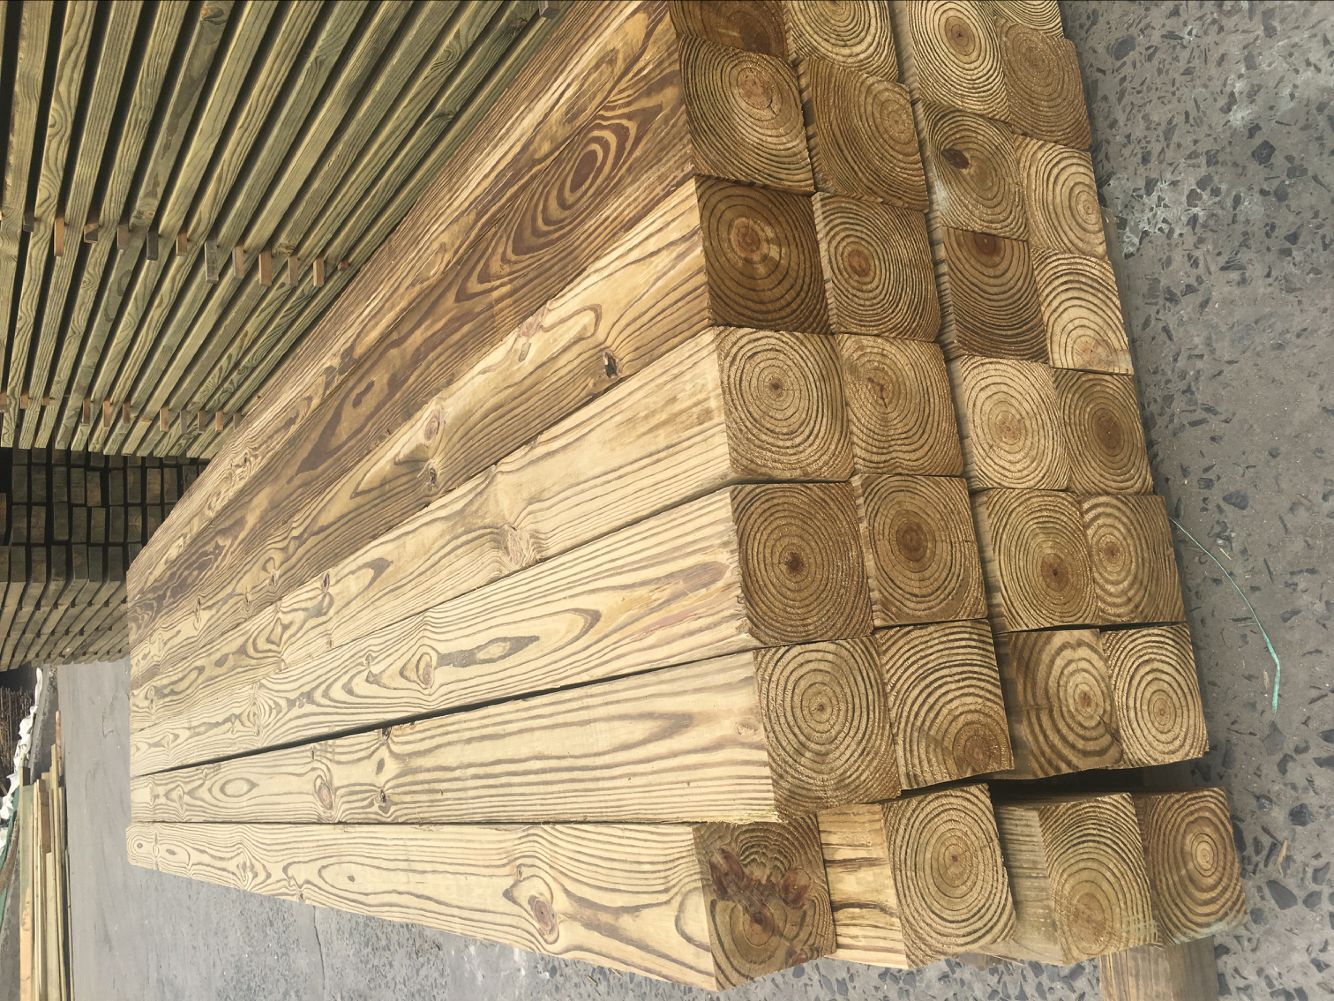 南方松防腐木 美国南方松防腐木 板材 方料 圆柱加工